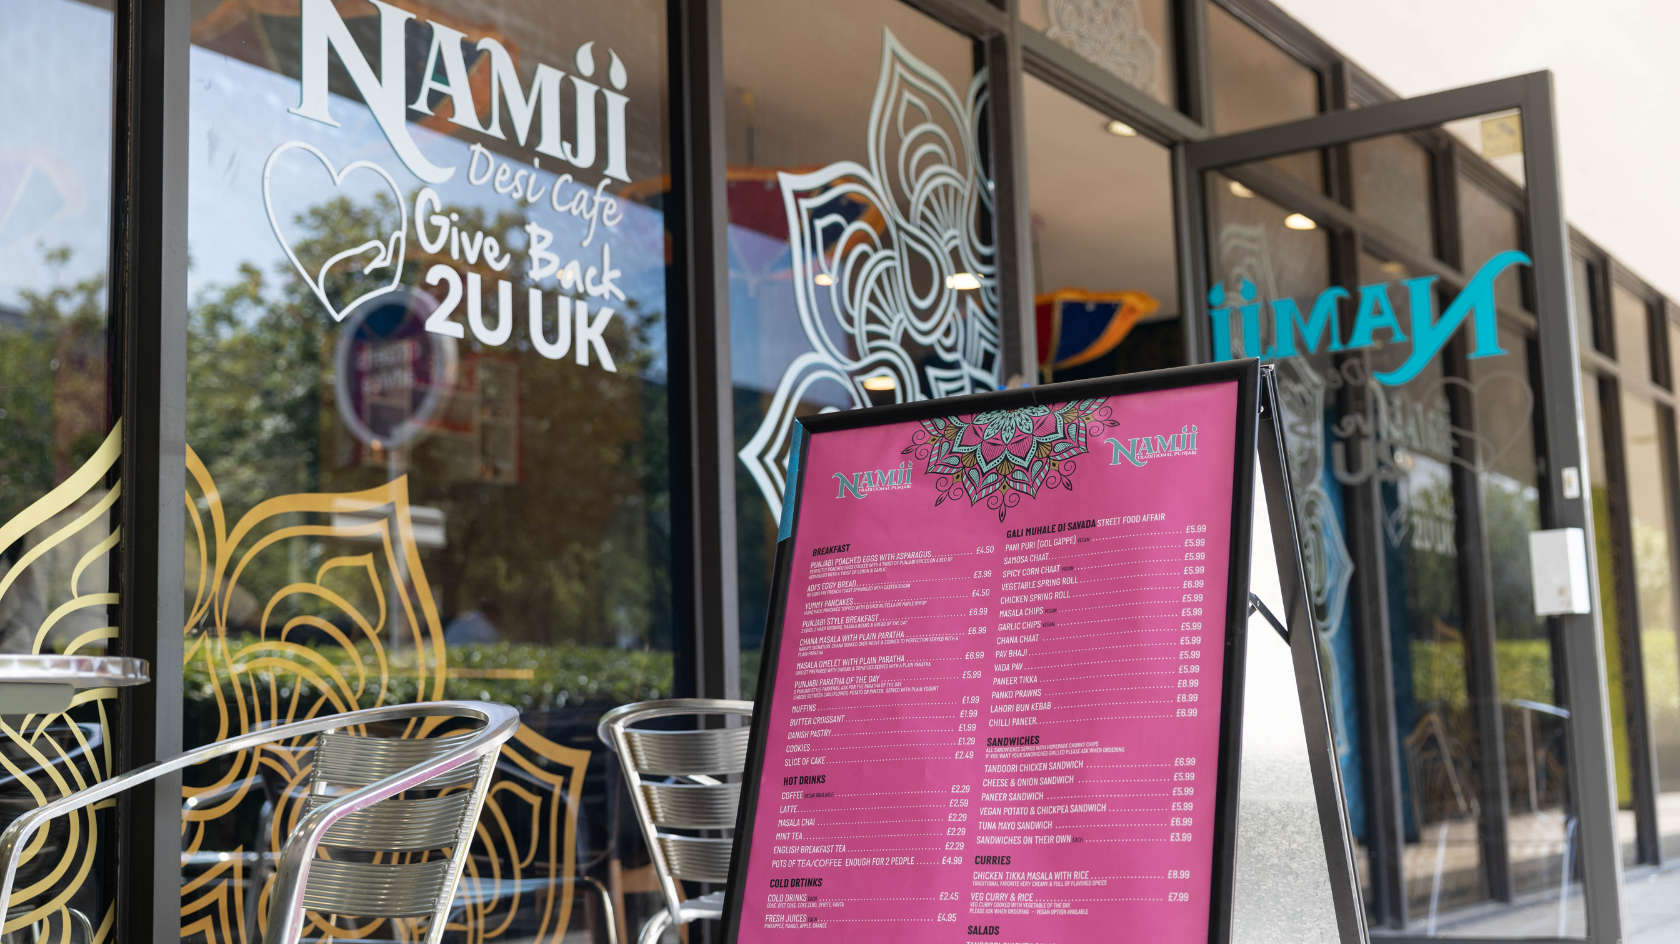 Brand new Namji cafe officially opens in Milton Keynes – MKFM 106.3FM